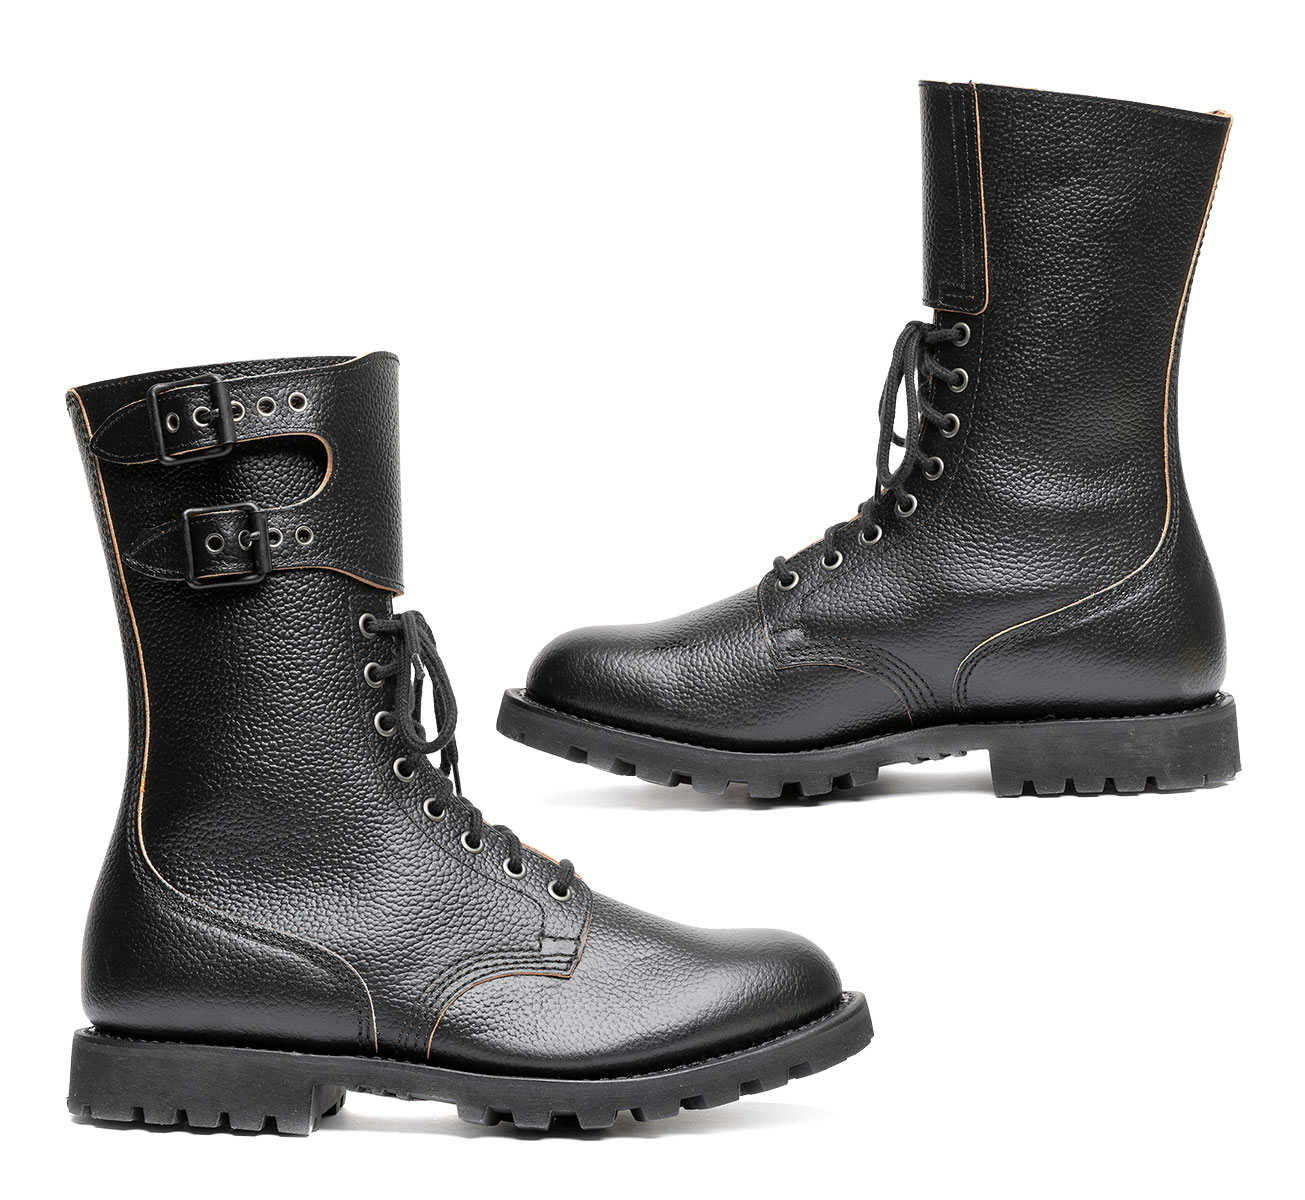 French BM65 double buckle boots, black, surplus, unissued